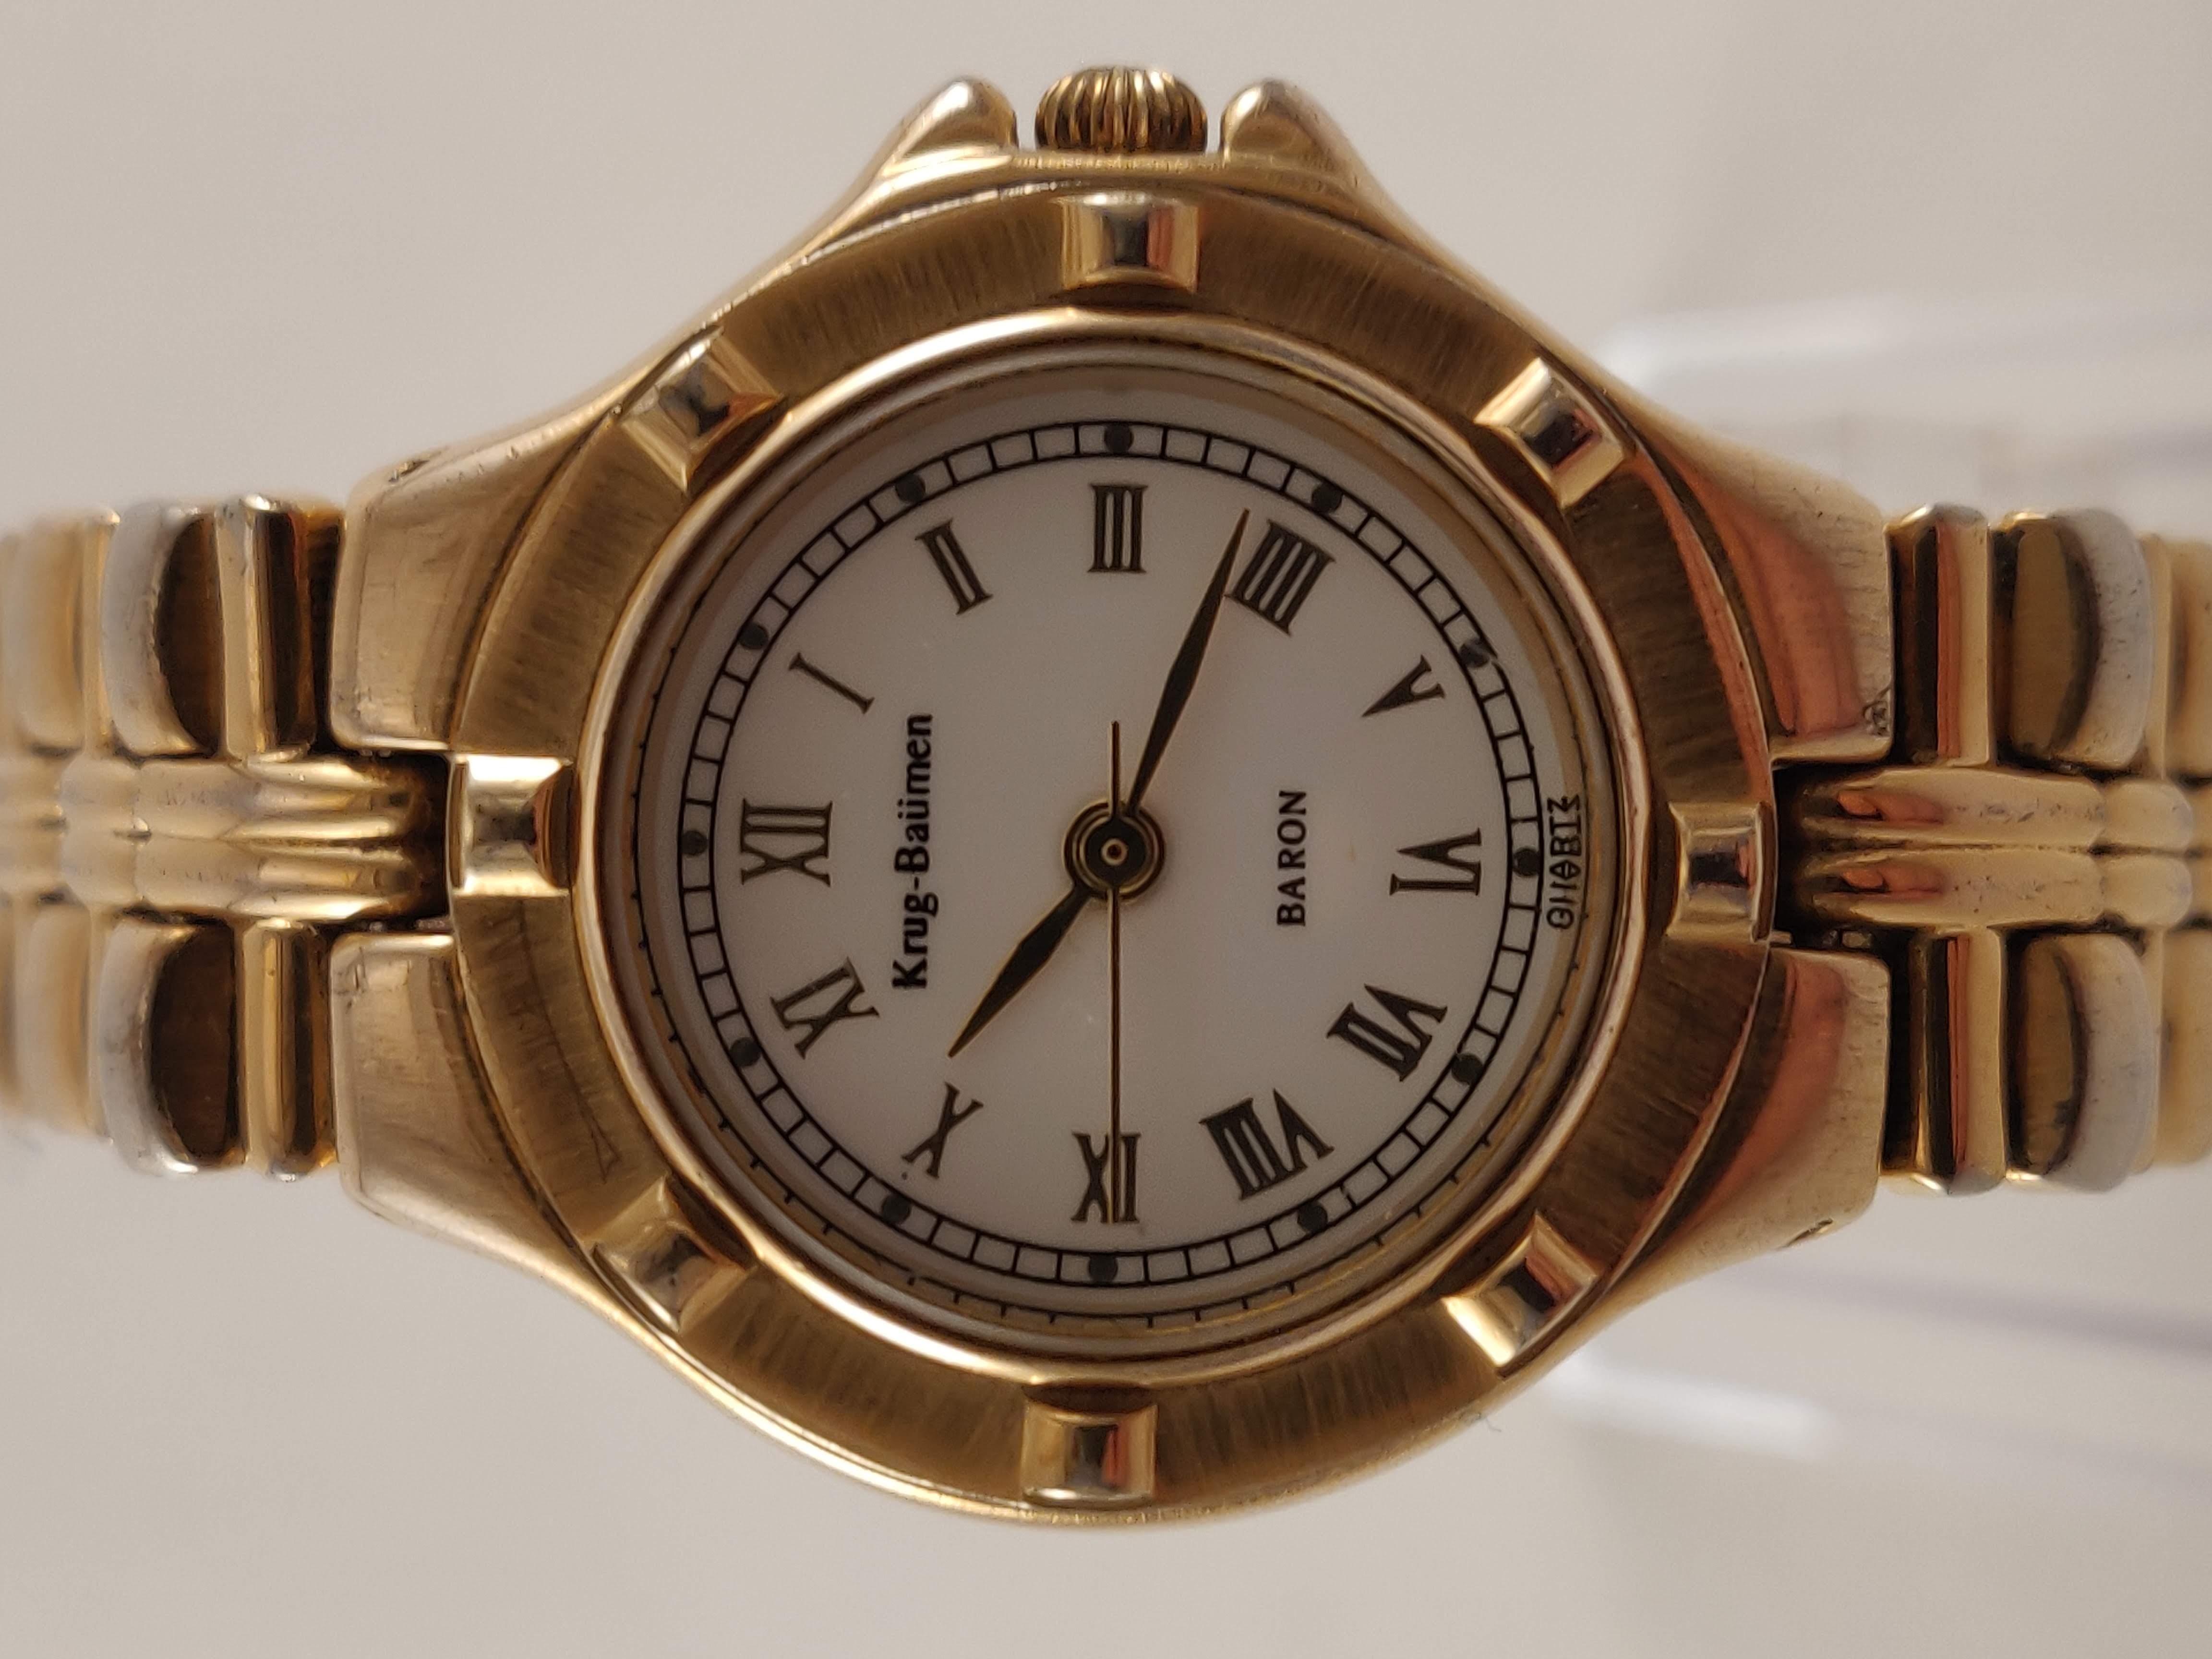 Krug-Baümen BARON Gouden Dames Horloge, Verguld 18ct 